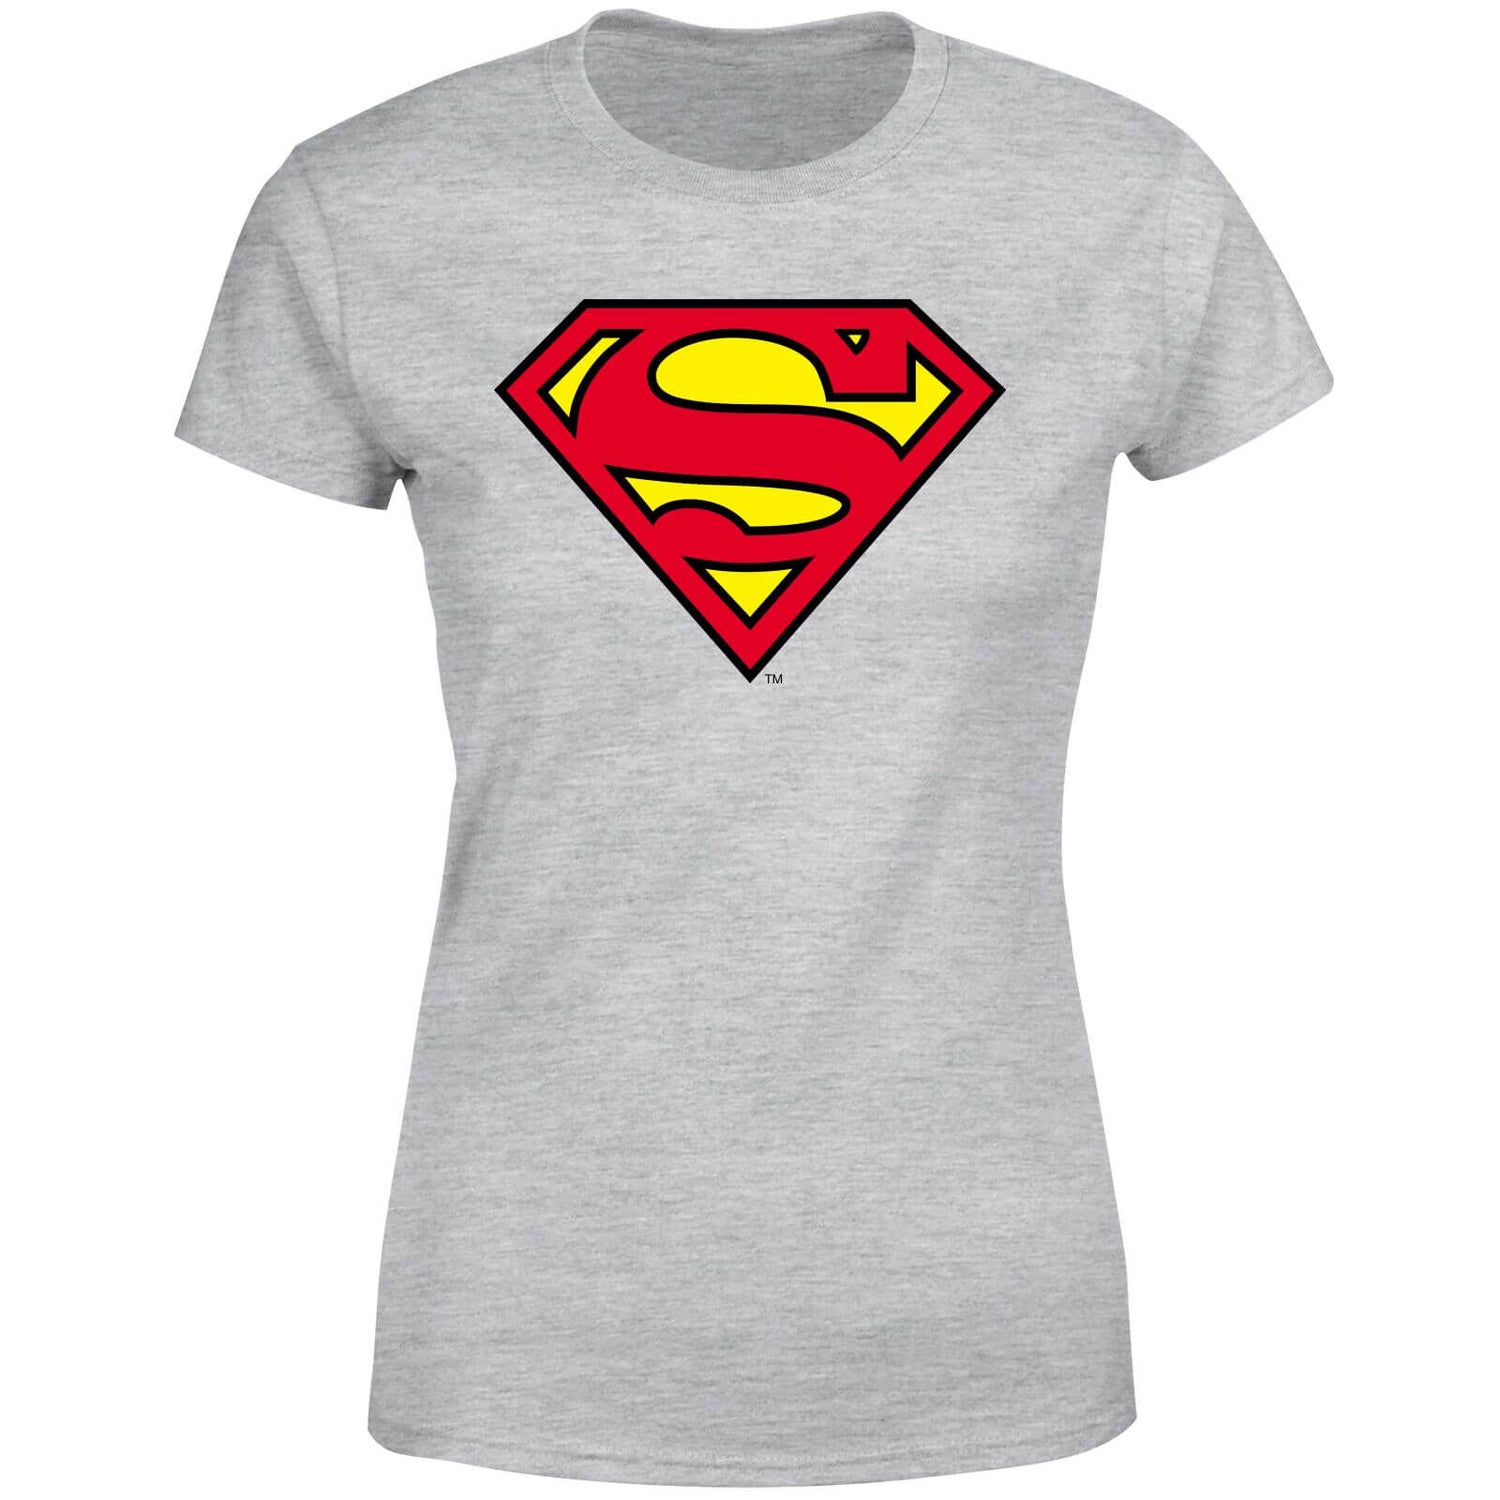 Official Superman Shield Women's T-Shirt - Grey